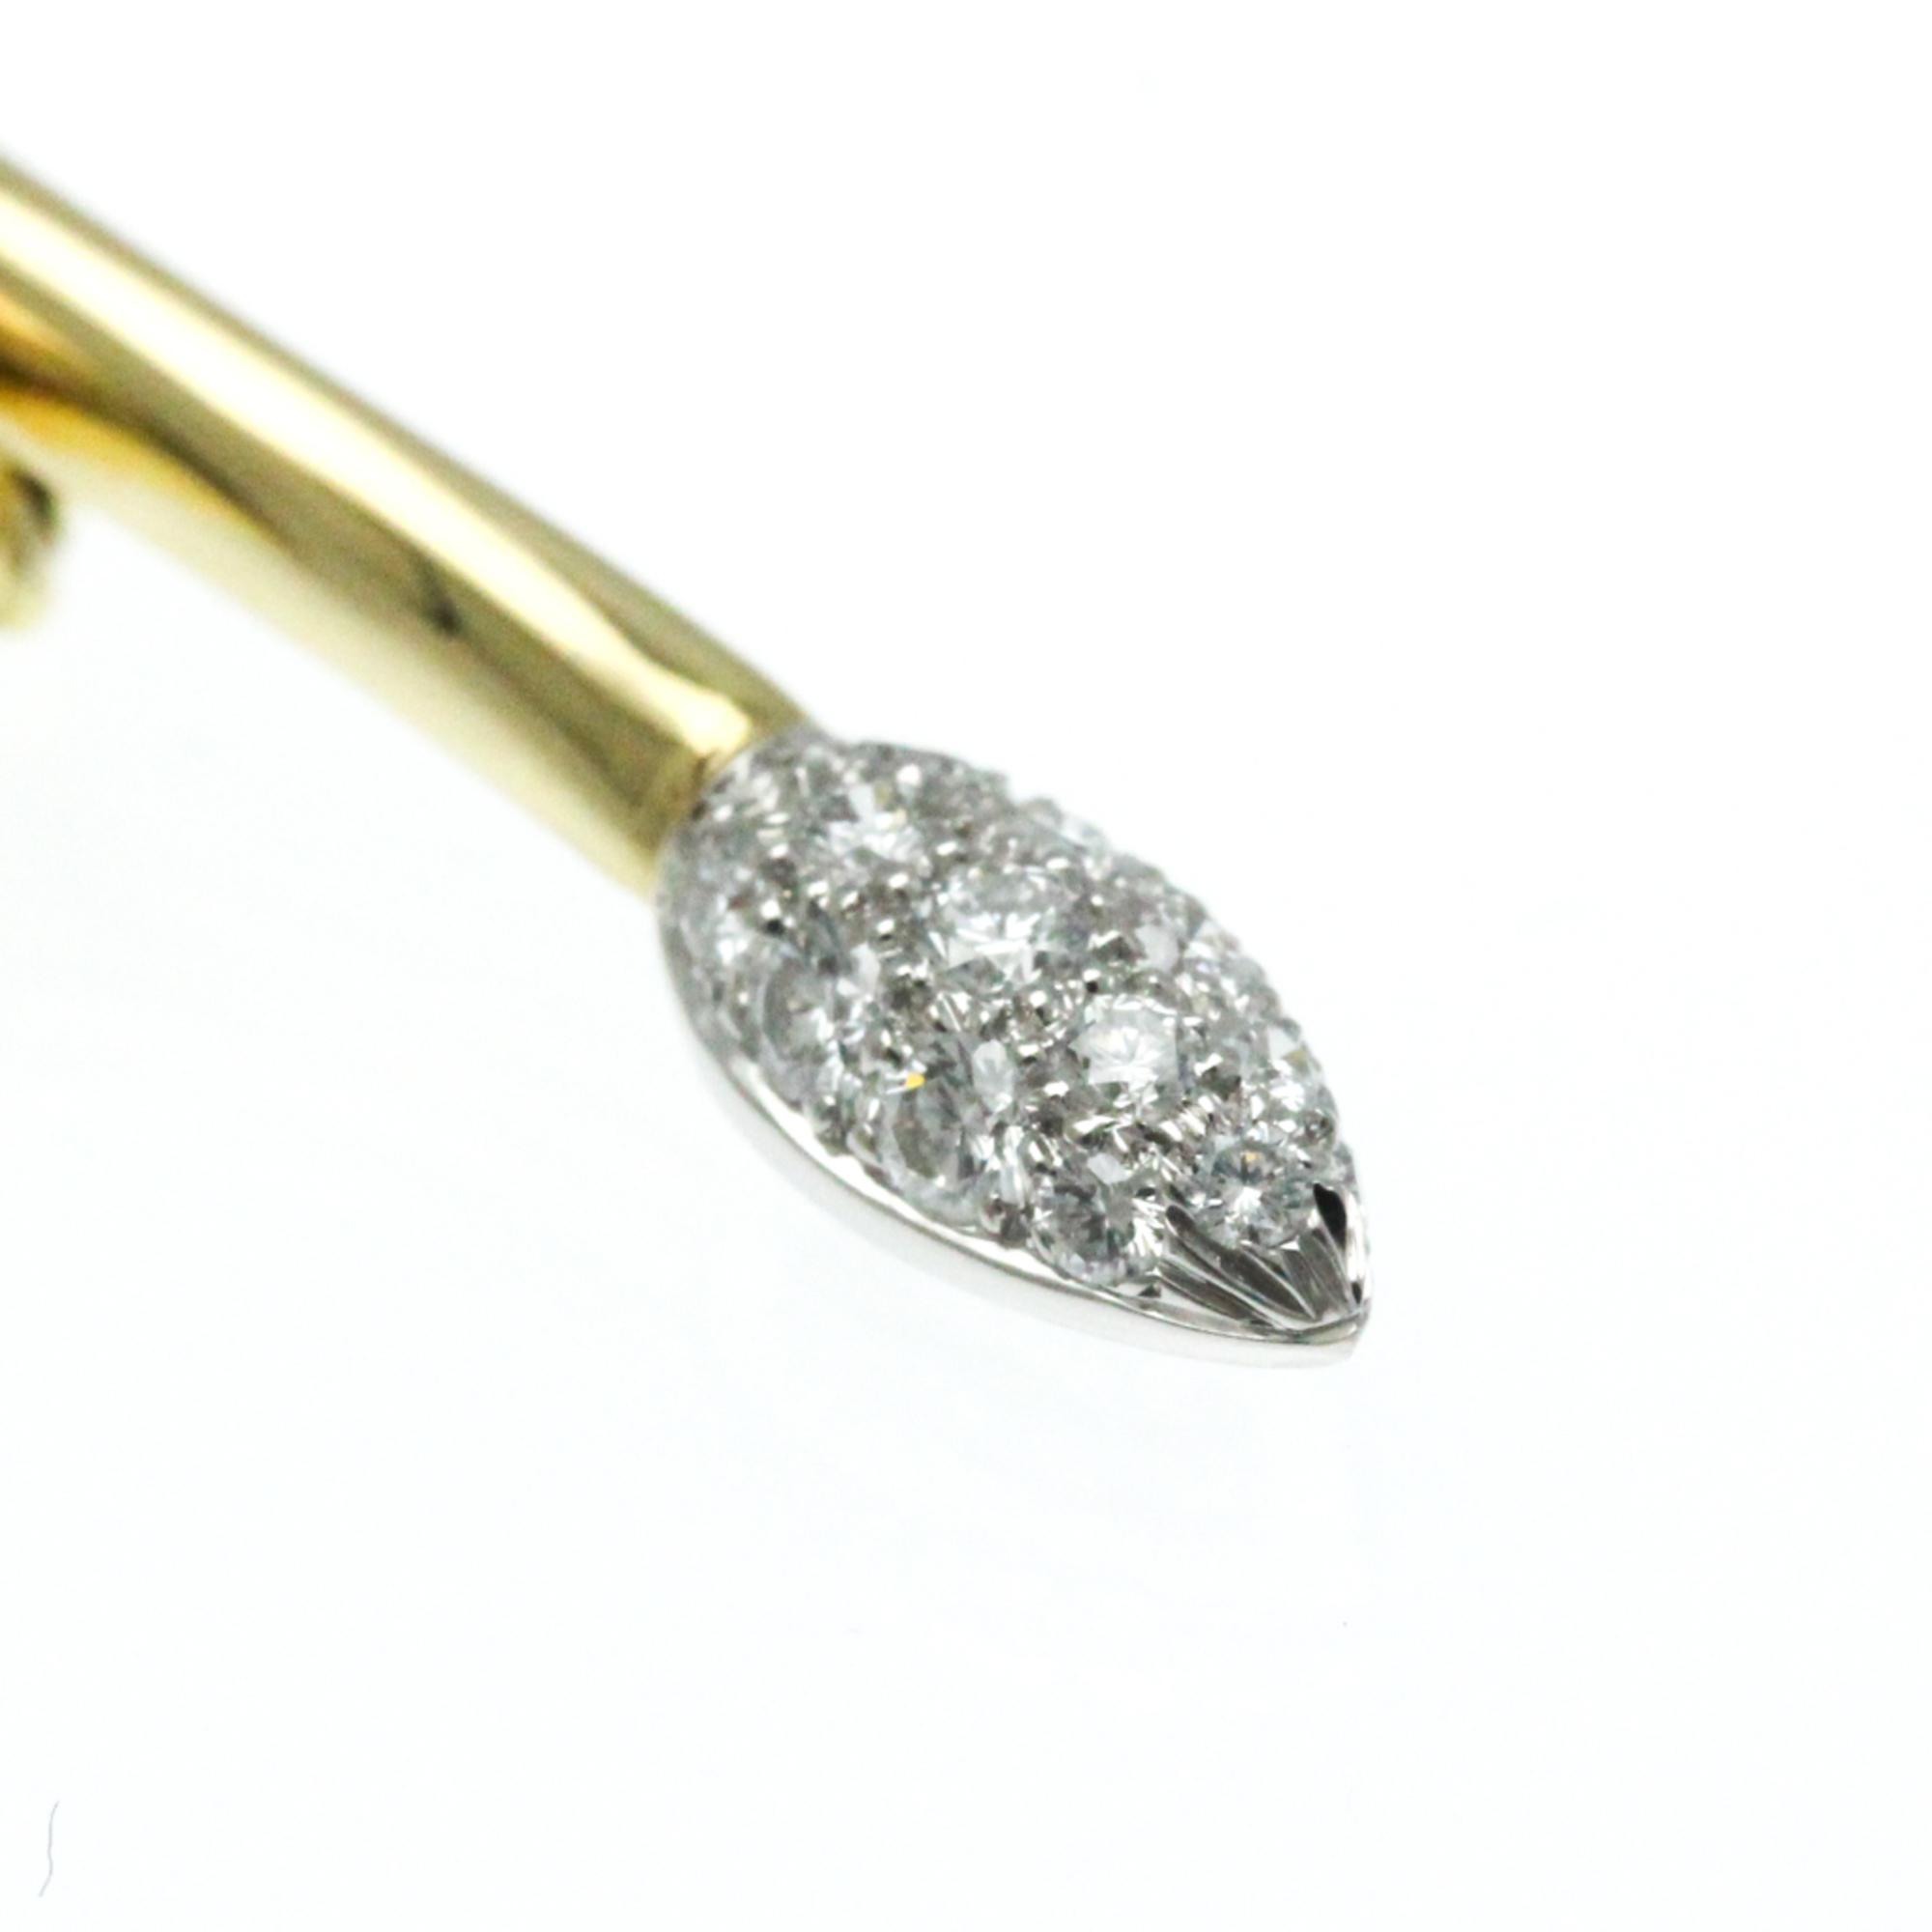 Tiffany Leaf Motif Diamond Brooch Platinum,Yellow Gold (18K) Diamond Brooch Gold,Silver